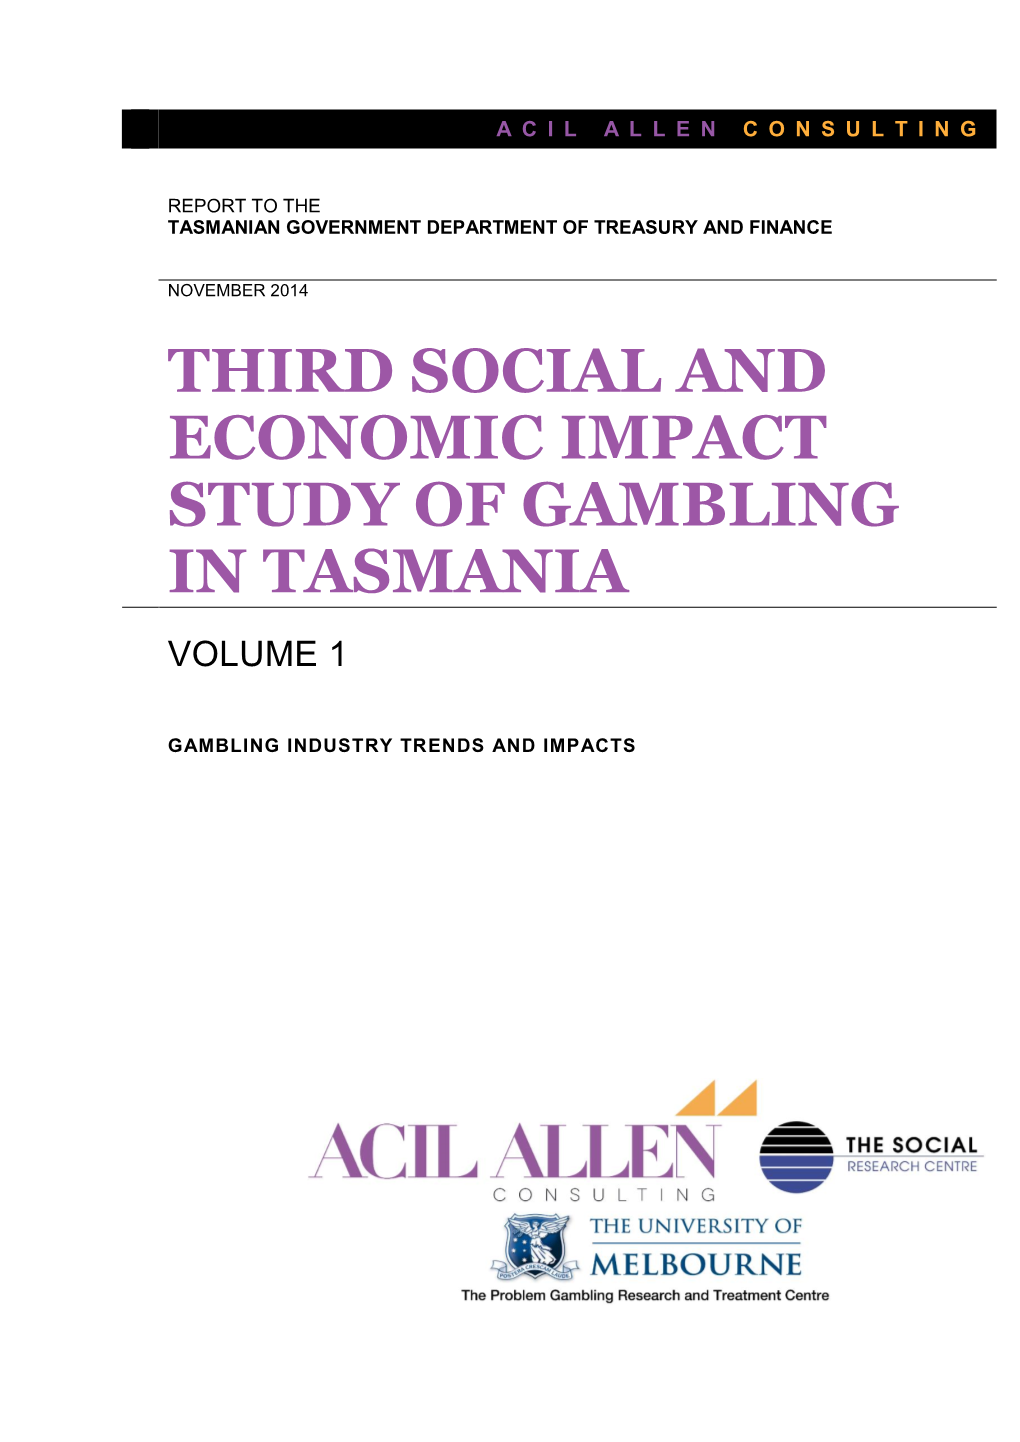 Third Social and Economic Impact Study of Gambling in Tasmania